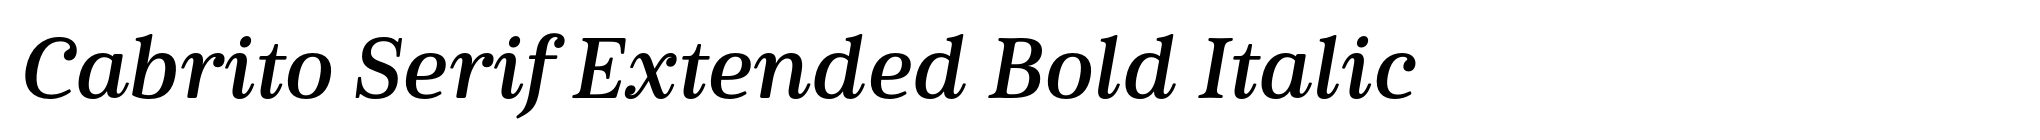 Cabrito Serif Extended Bold Italic image